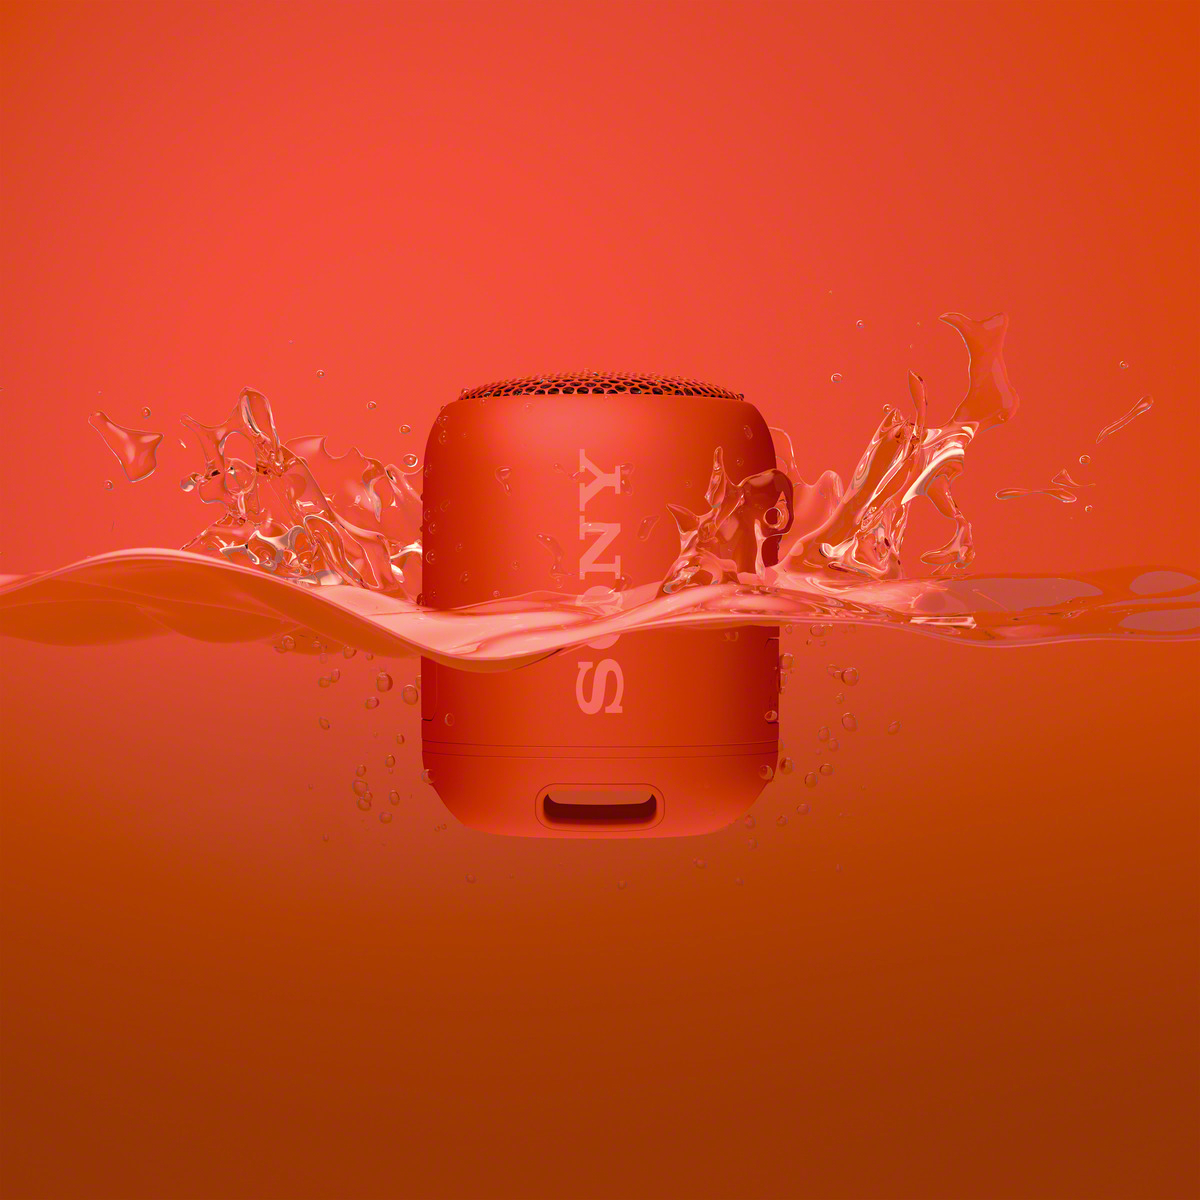 SONY Rot, Bluetooth Wasserfest SRS-XB12 Lautsprecher,